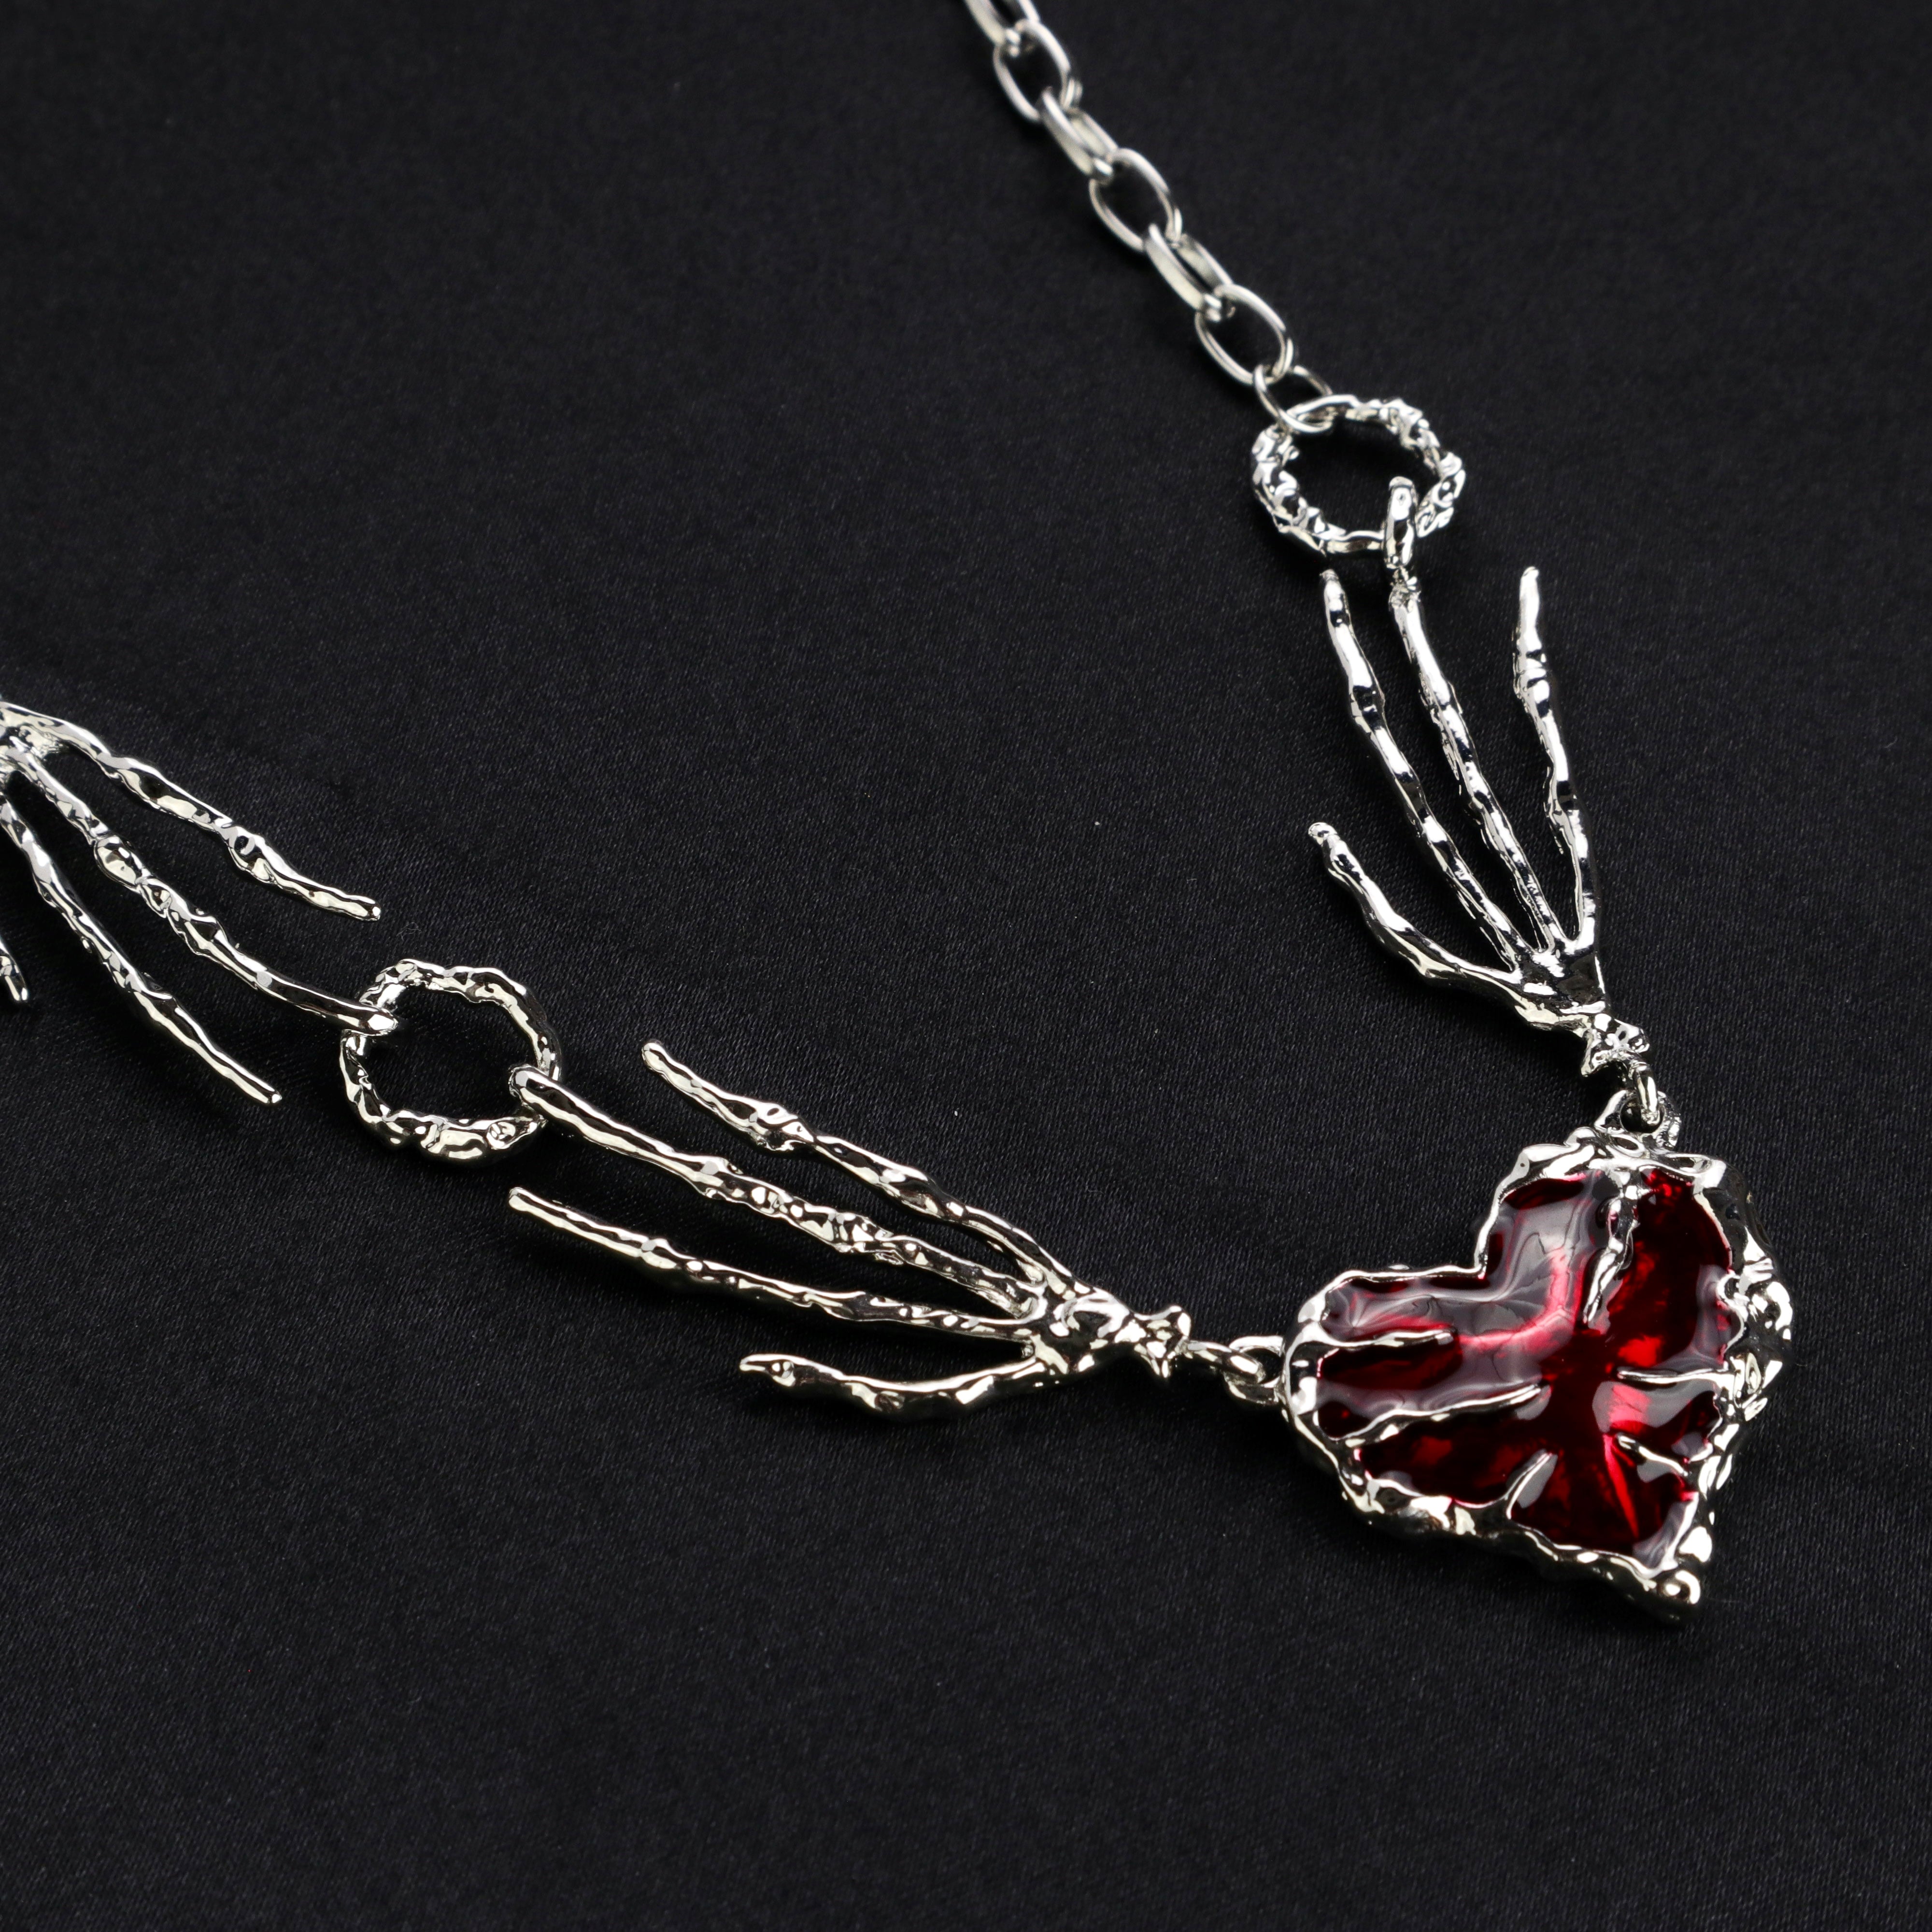 Big Heart Pendant Necklace